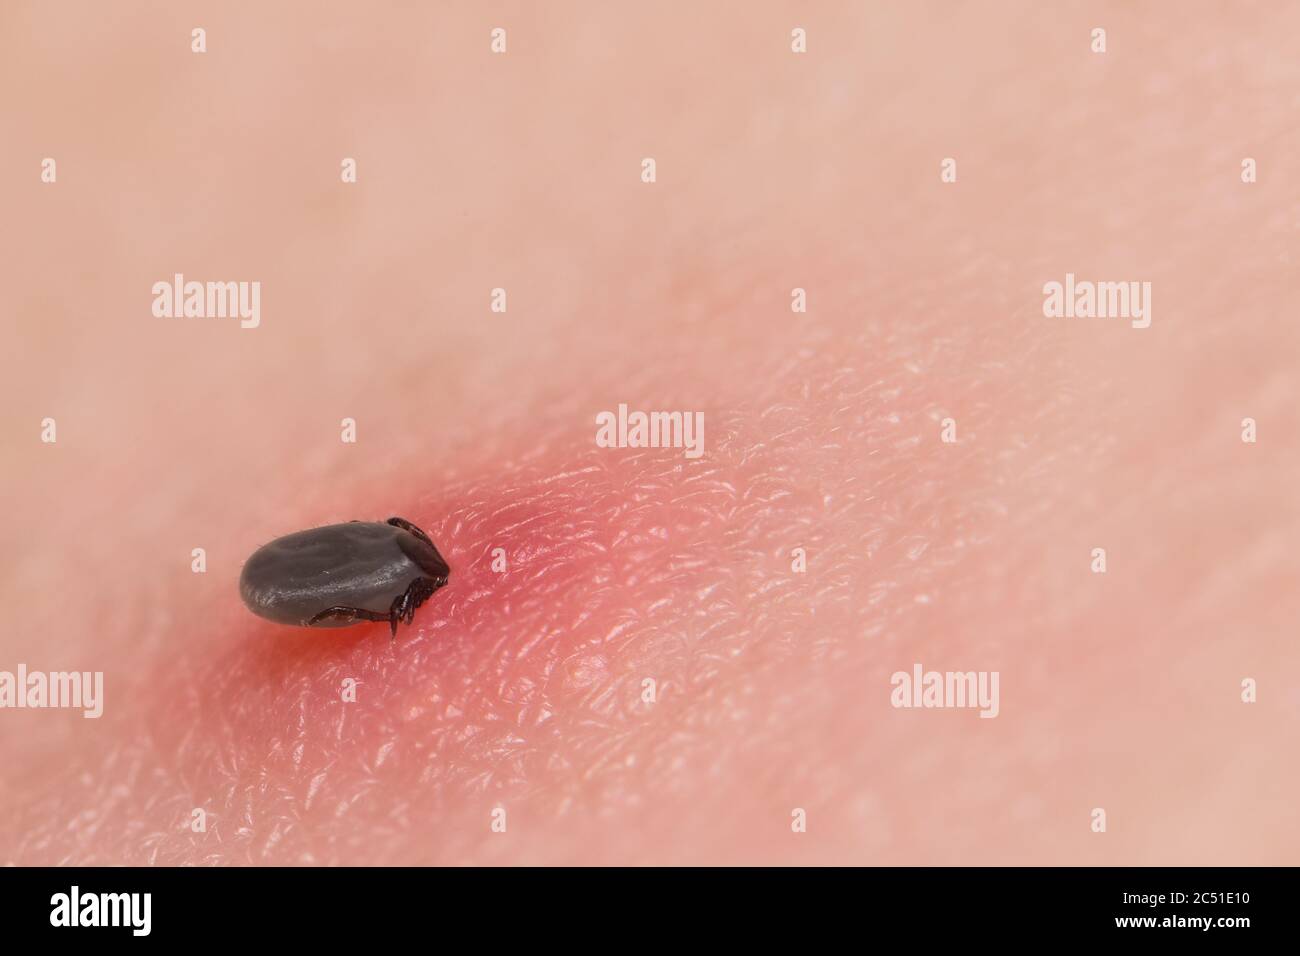 Female castor bean tick sucking blood in red irritated skin. Ixodes ricinus. Fattened parasite full of blood bitten in human epidermis. Lyme disease. Stock Photo